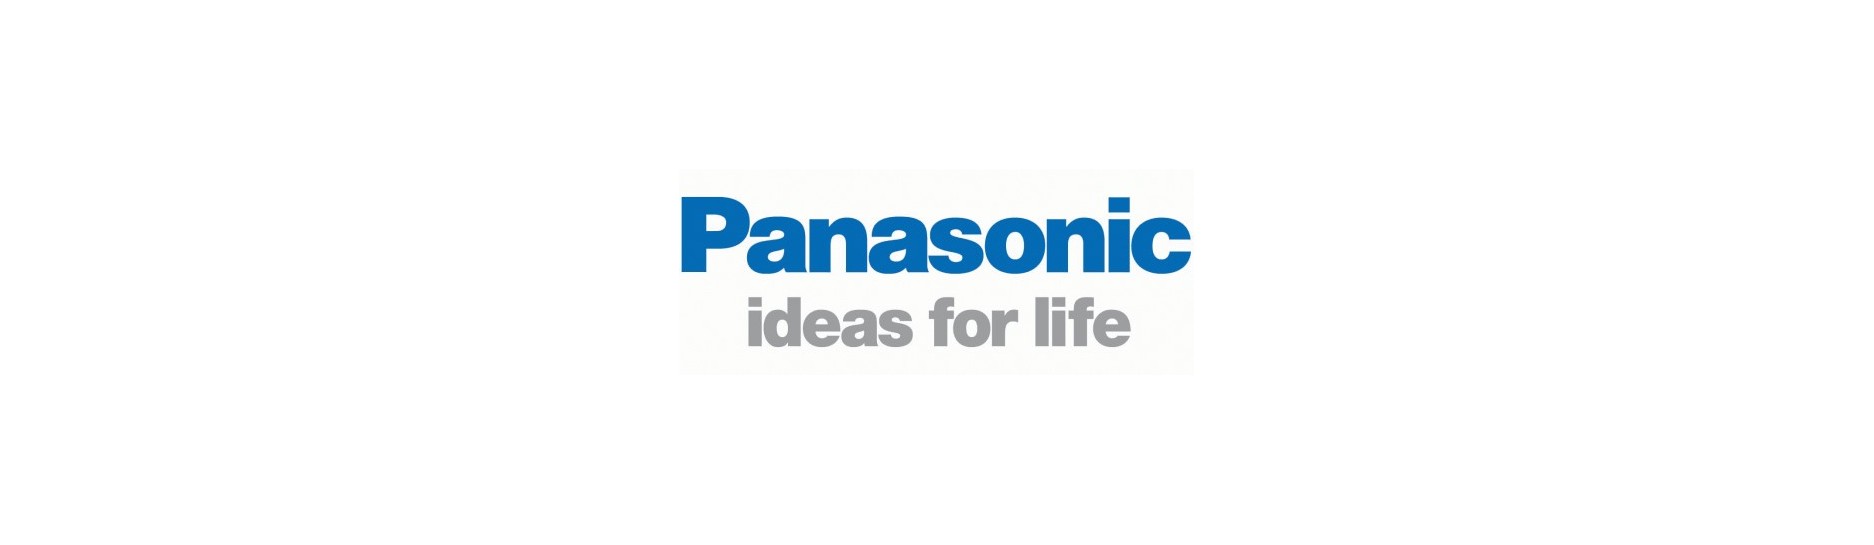 Panasonic Laser